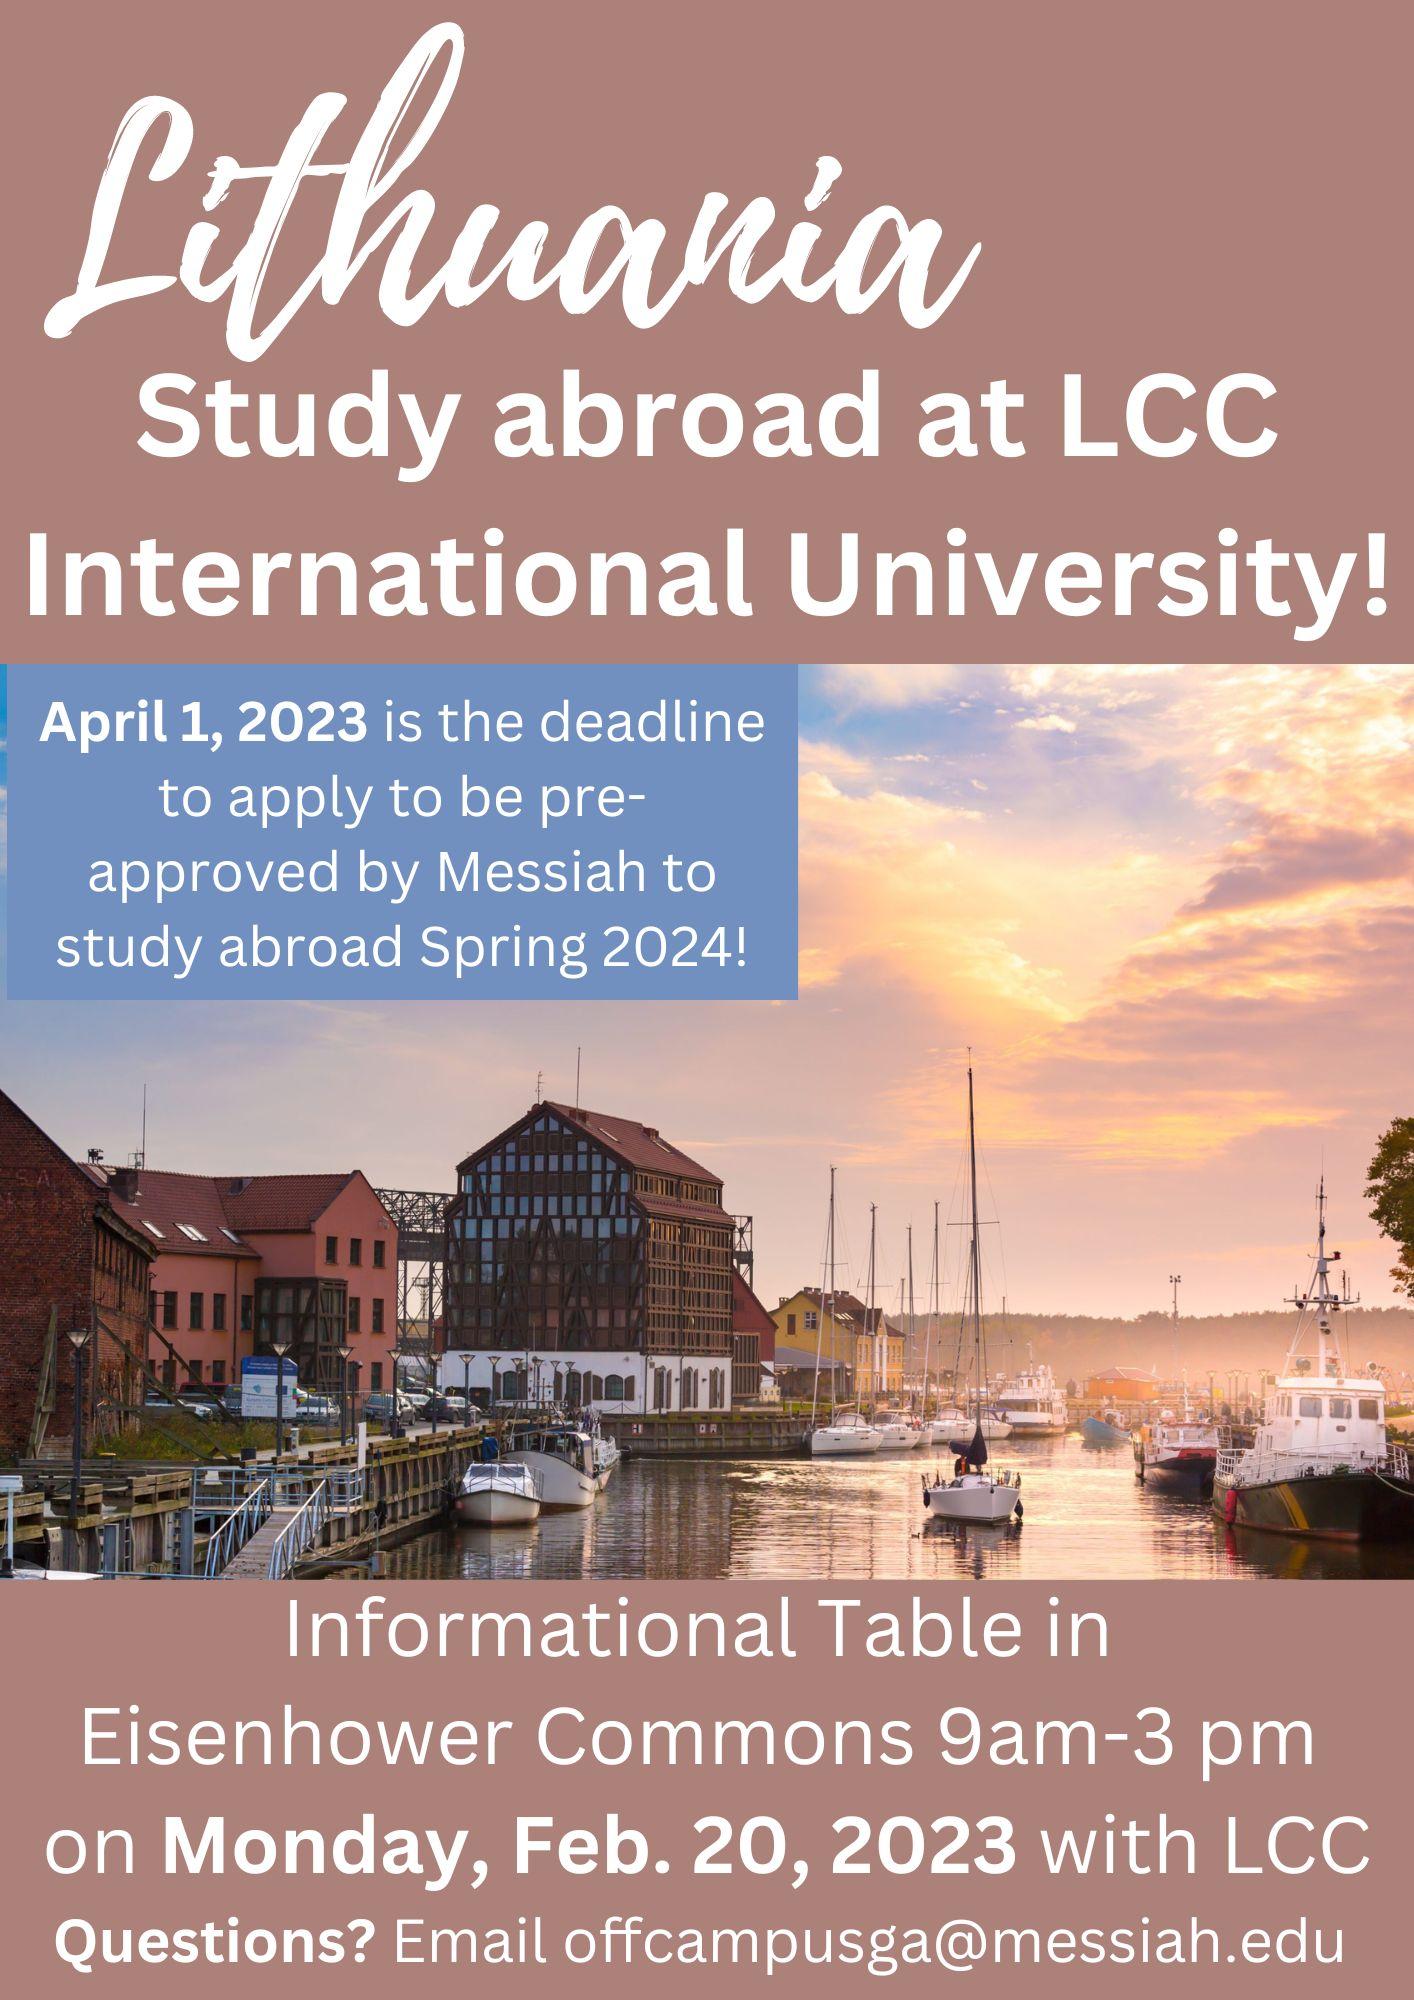 Lcc international university info table